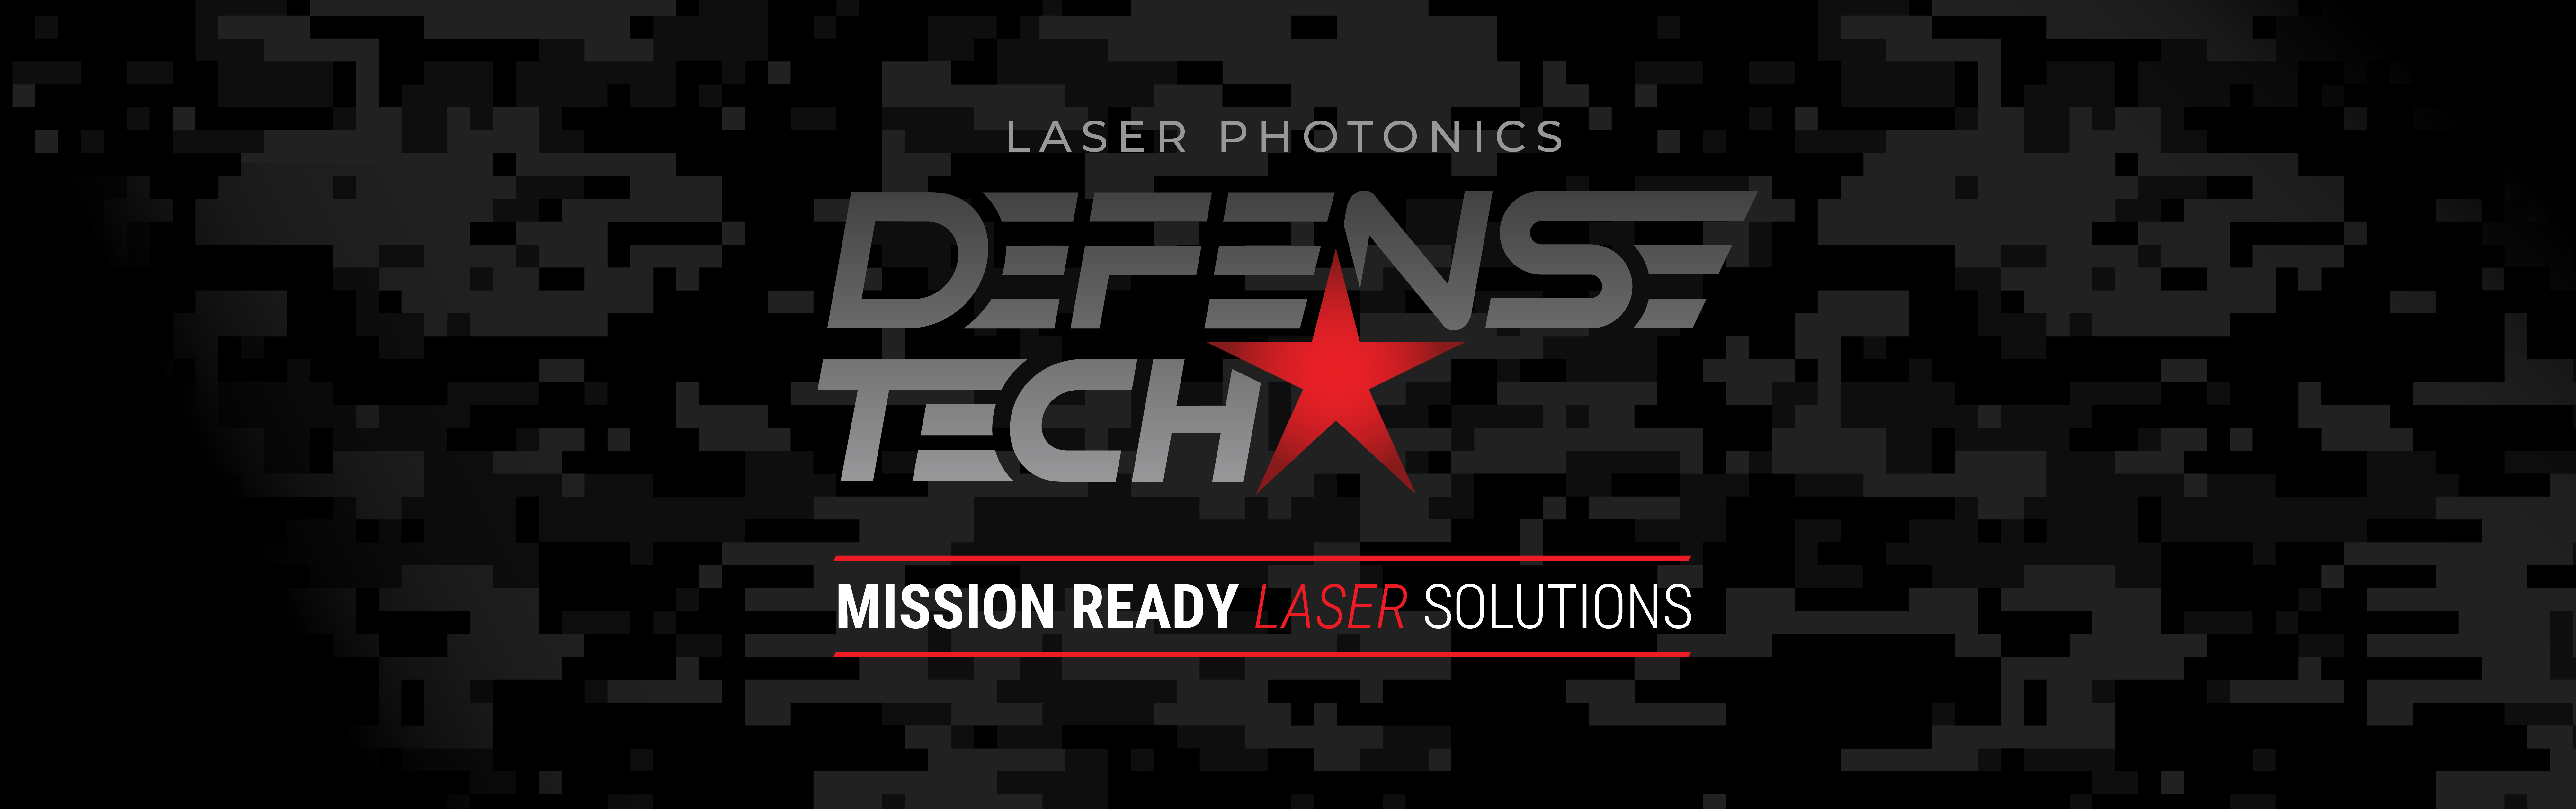 laser photonics - banner background